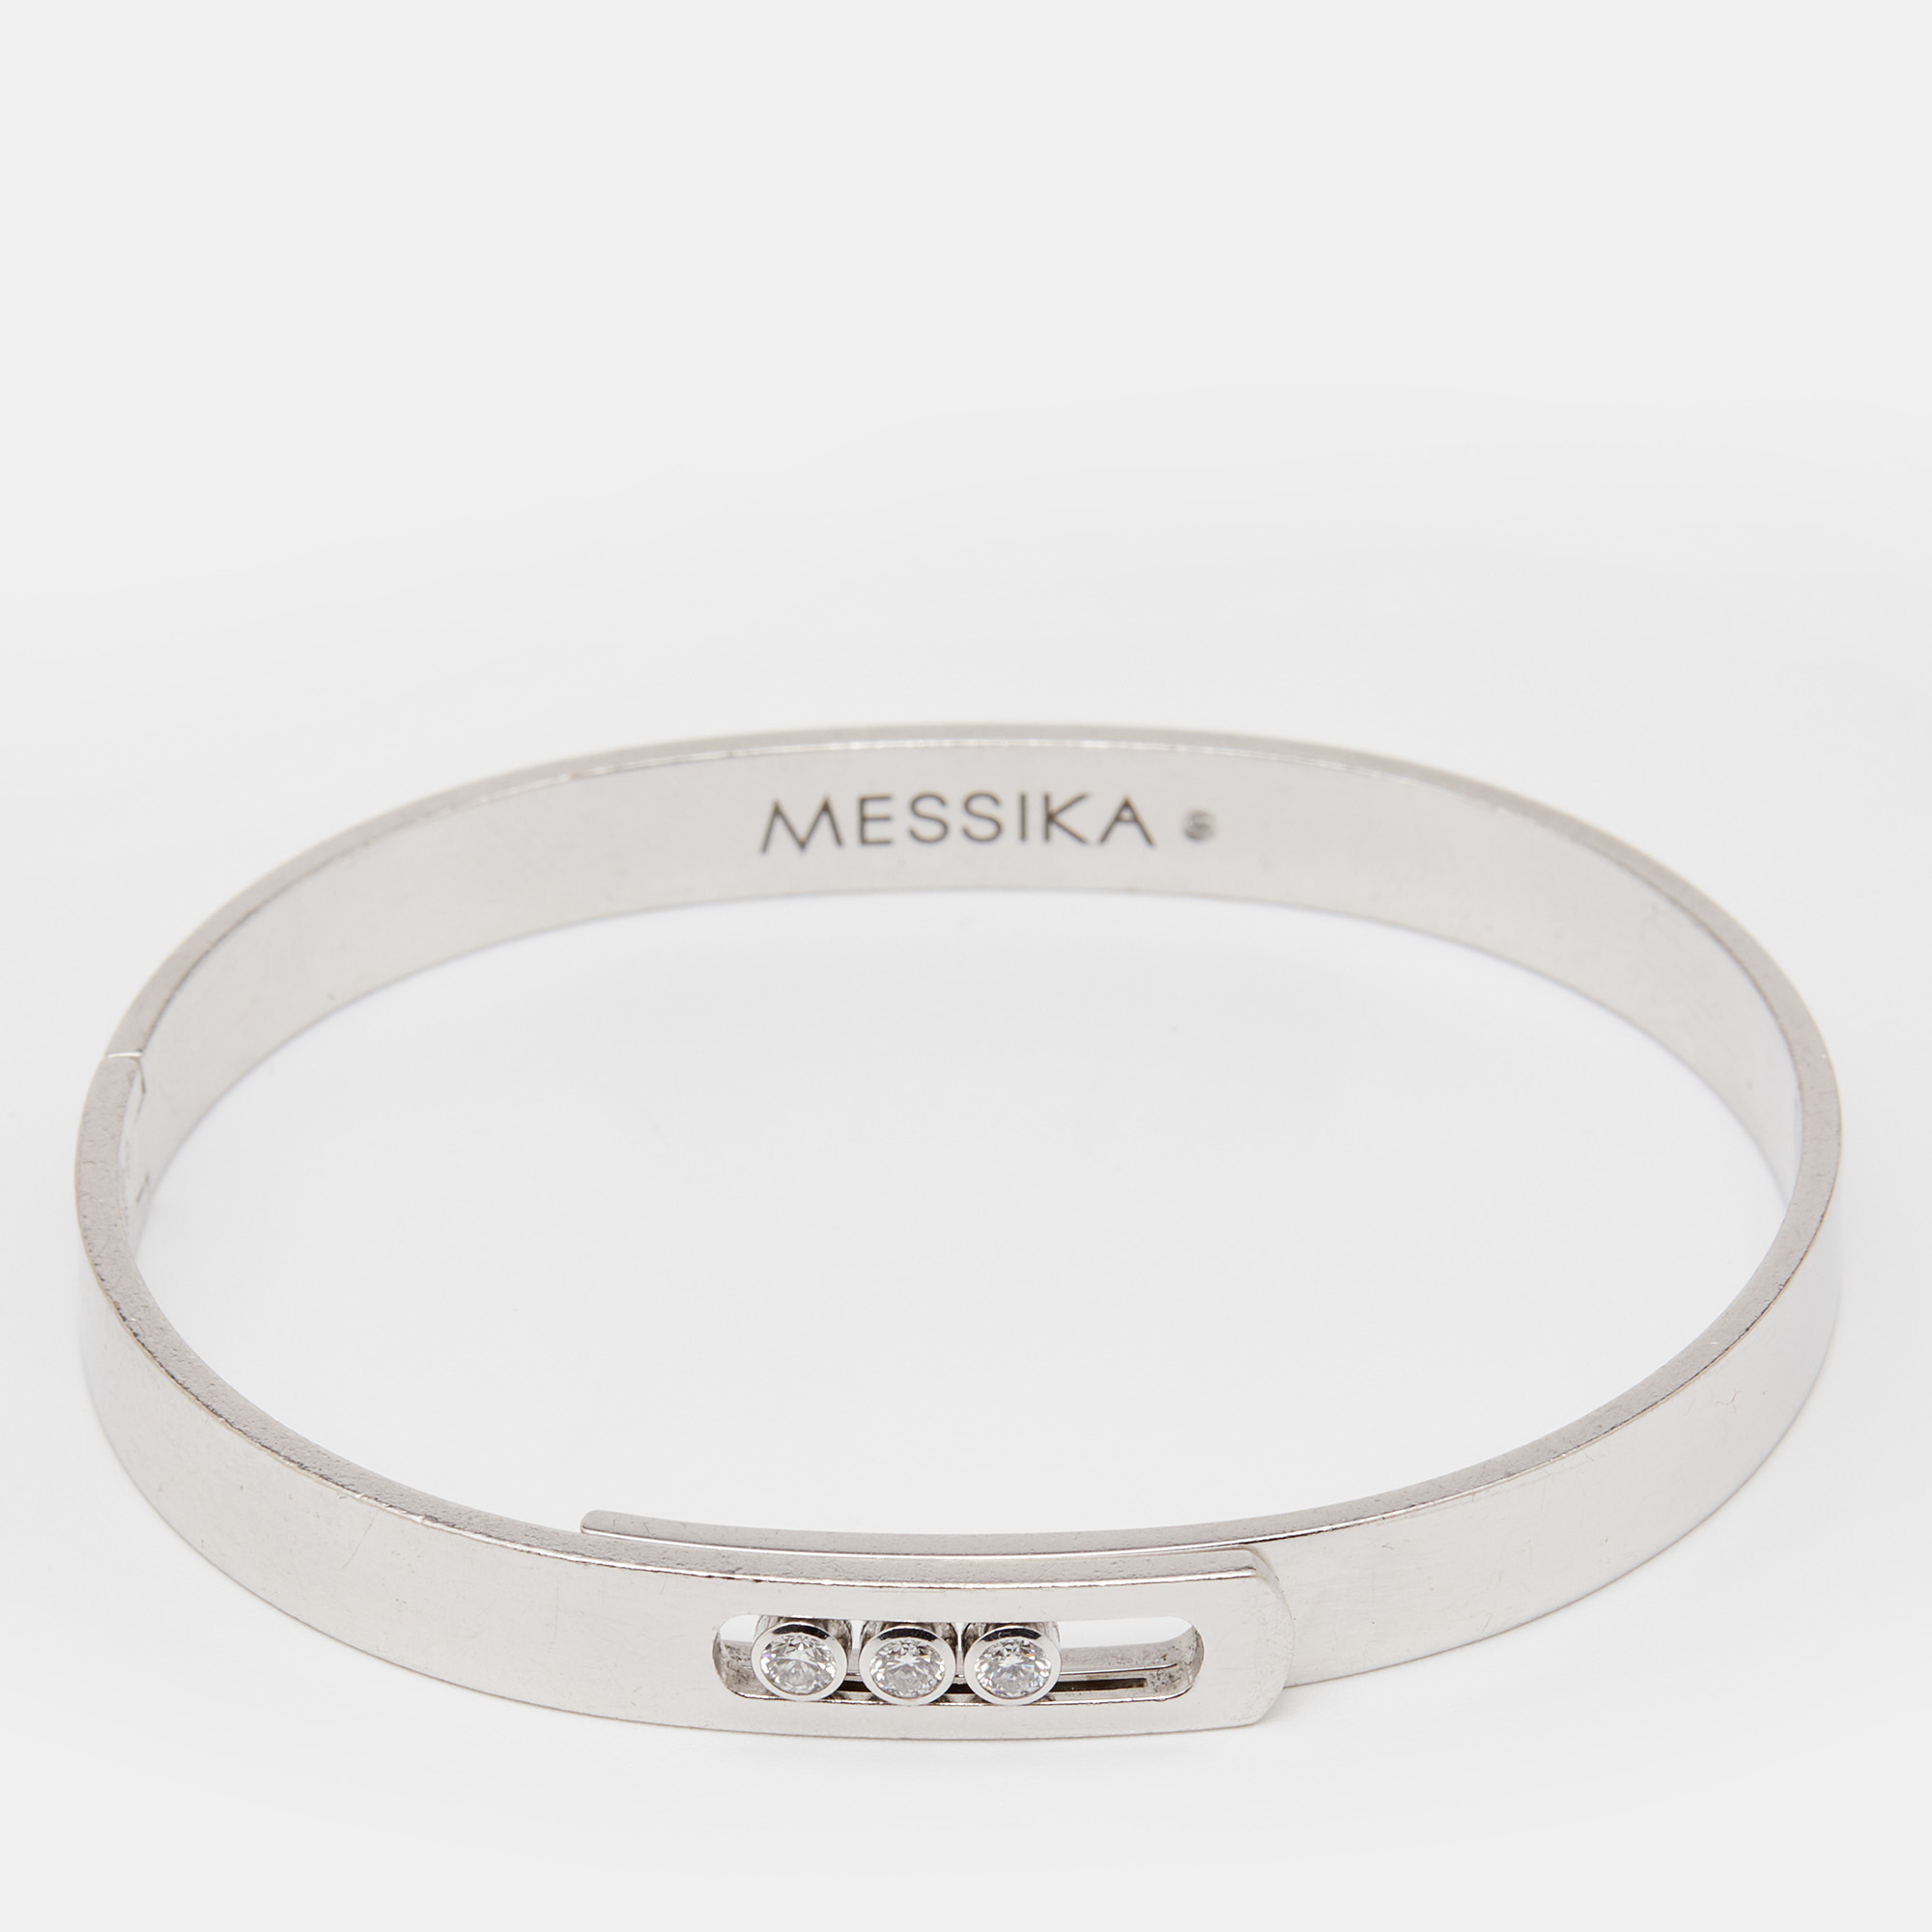 Pre-owned Messika Move Noa Diamonds 18k White Gold Bangle Bracelet